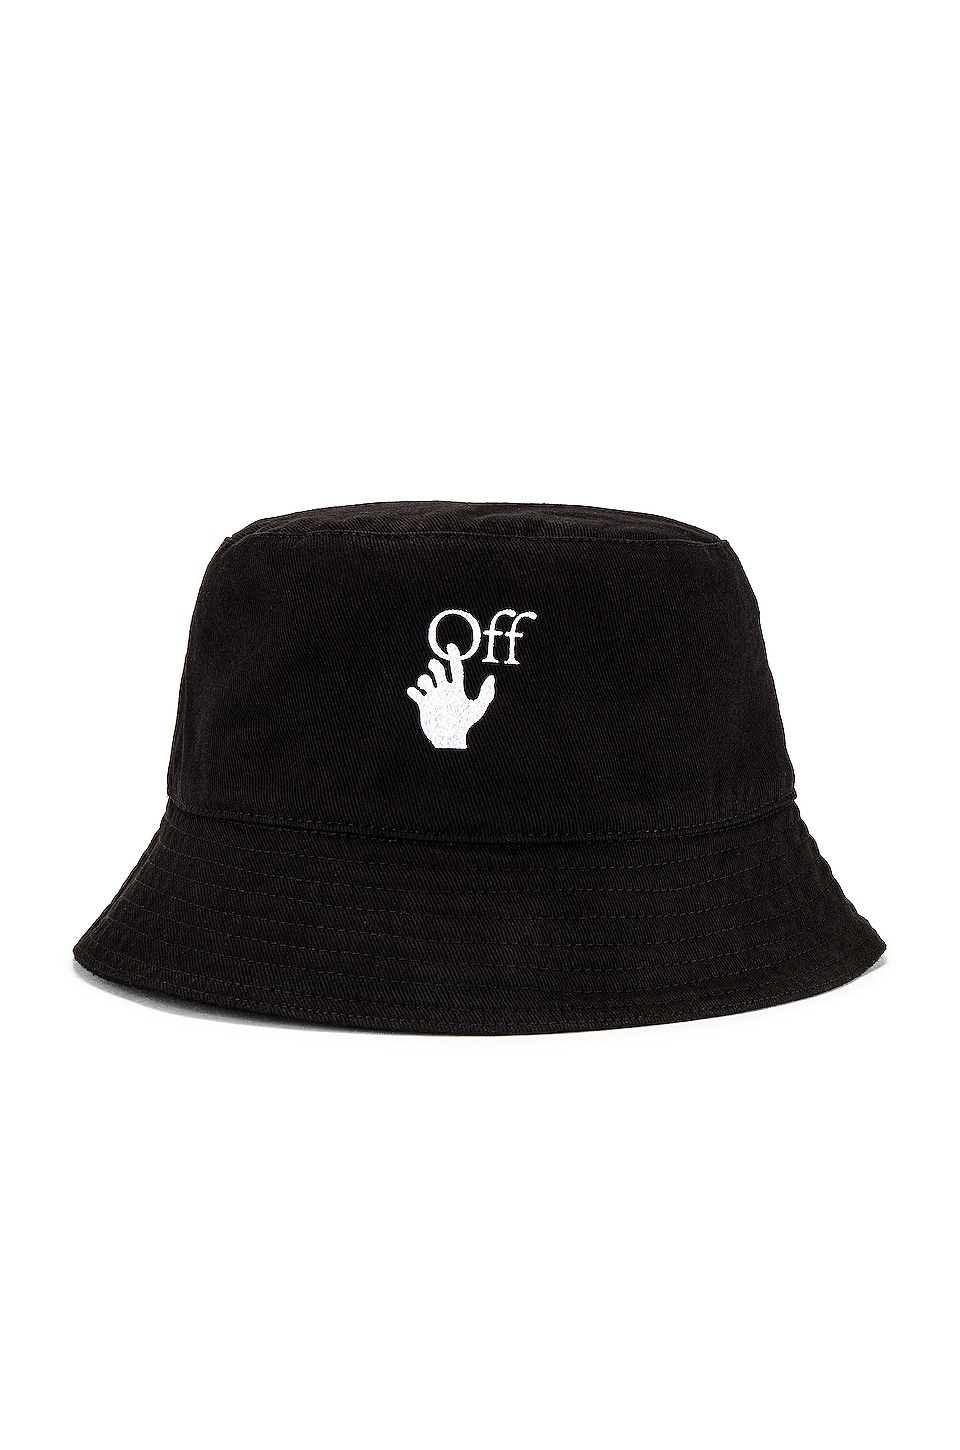 OFF-WHITE Hand Off Bucket Hat in Black | REVOLVE